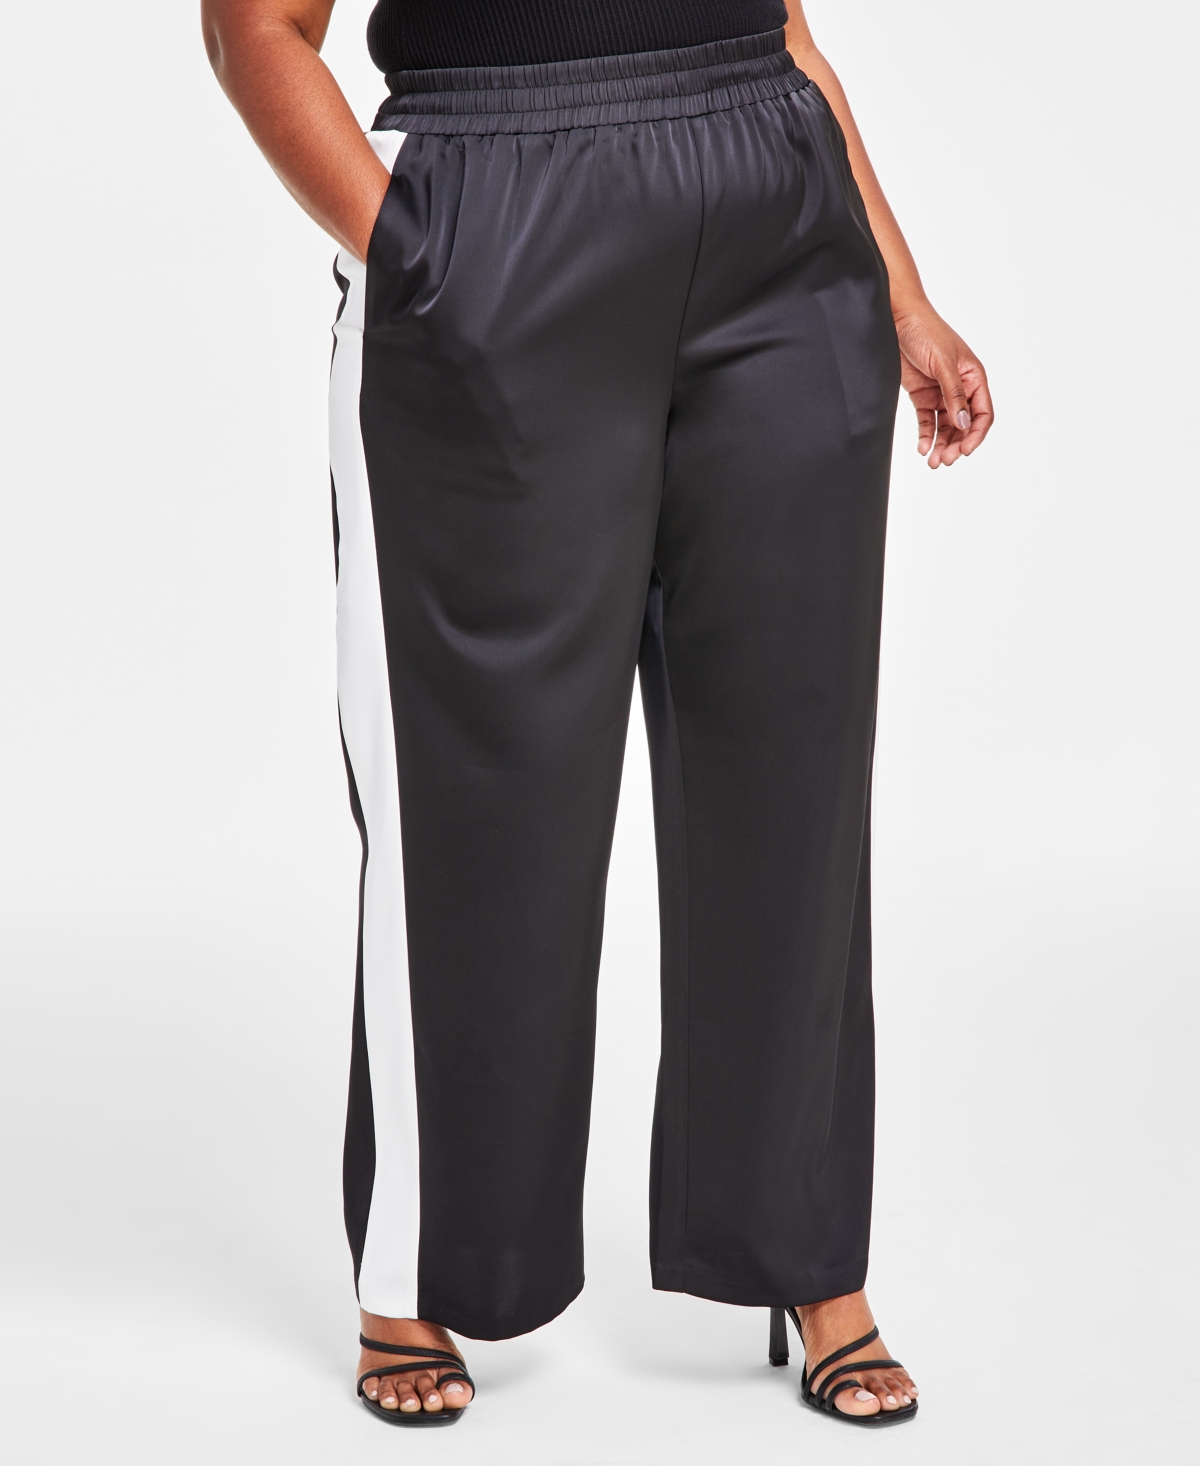 Nina Parker Trendy Plus Size Colorblocked Woven Pants In Black/white